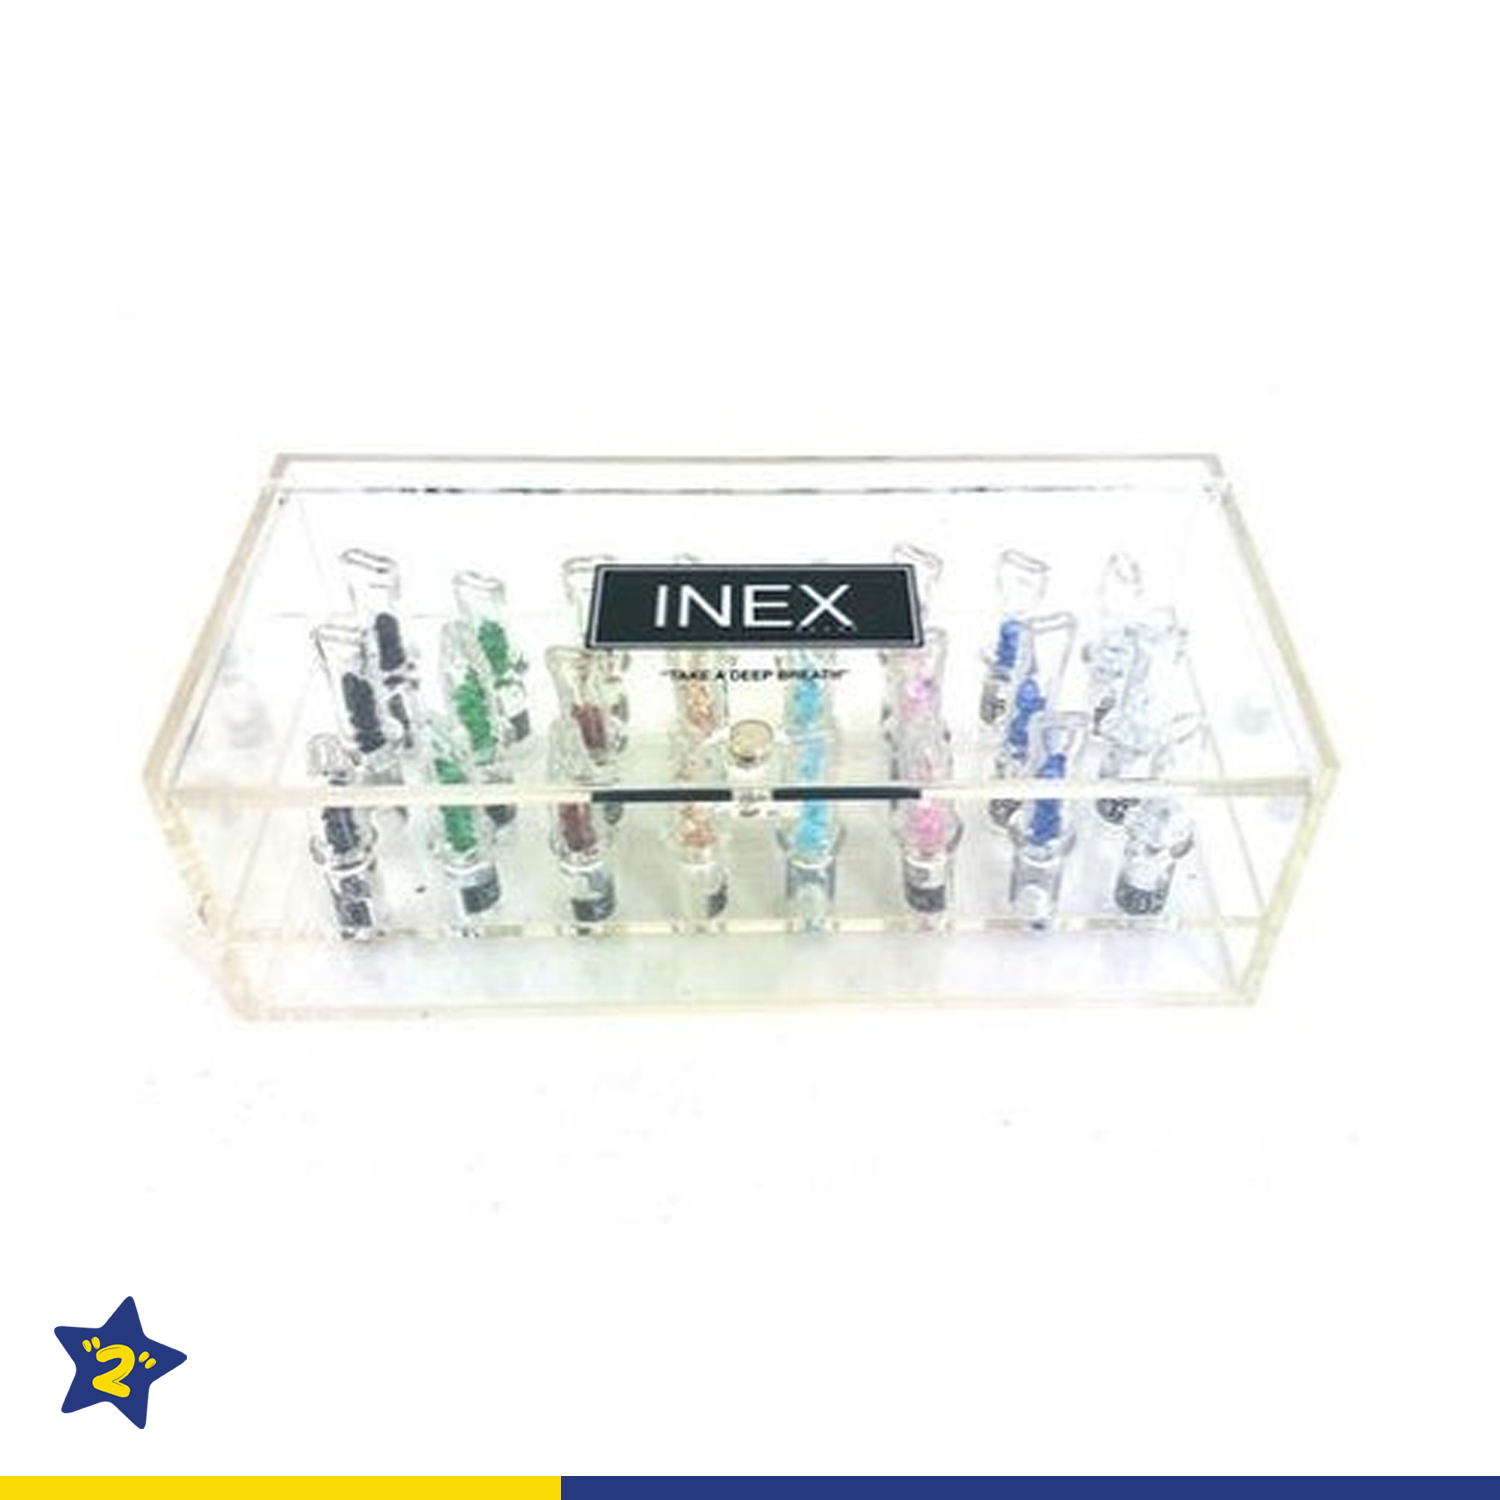 INEX Brand Jewel Glass Tip Display